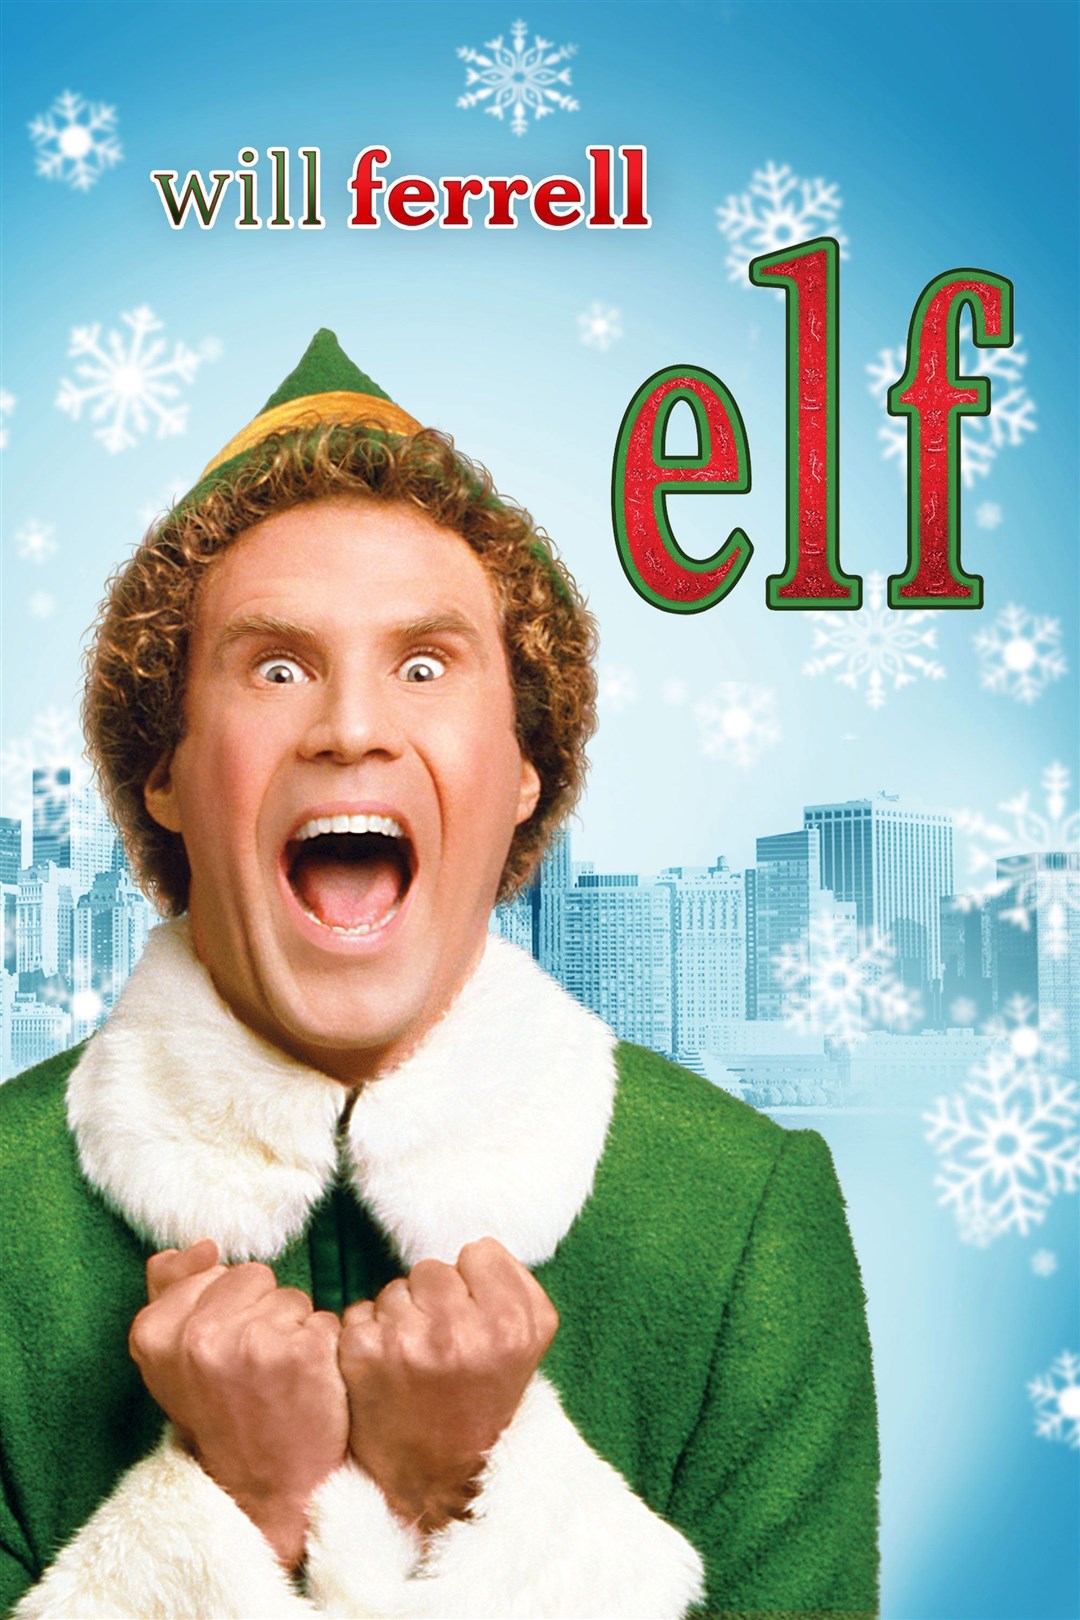 Elf starring Will Ferrell.